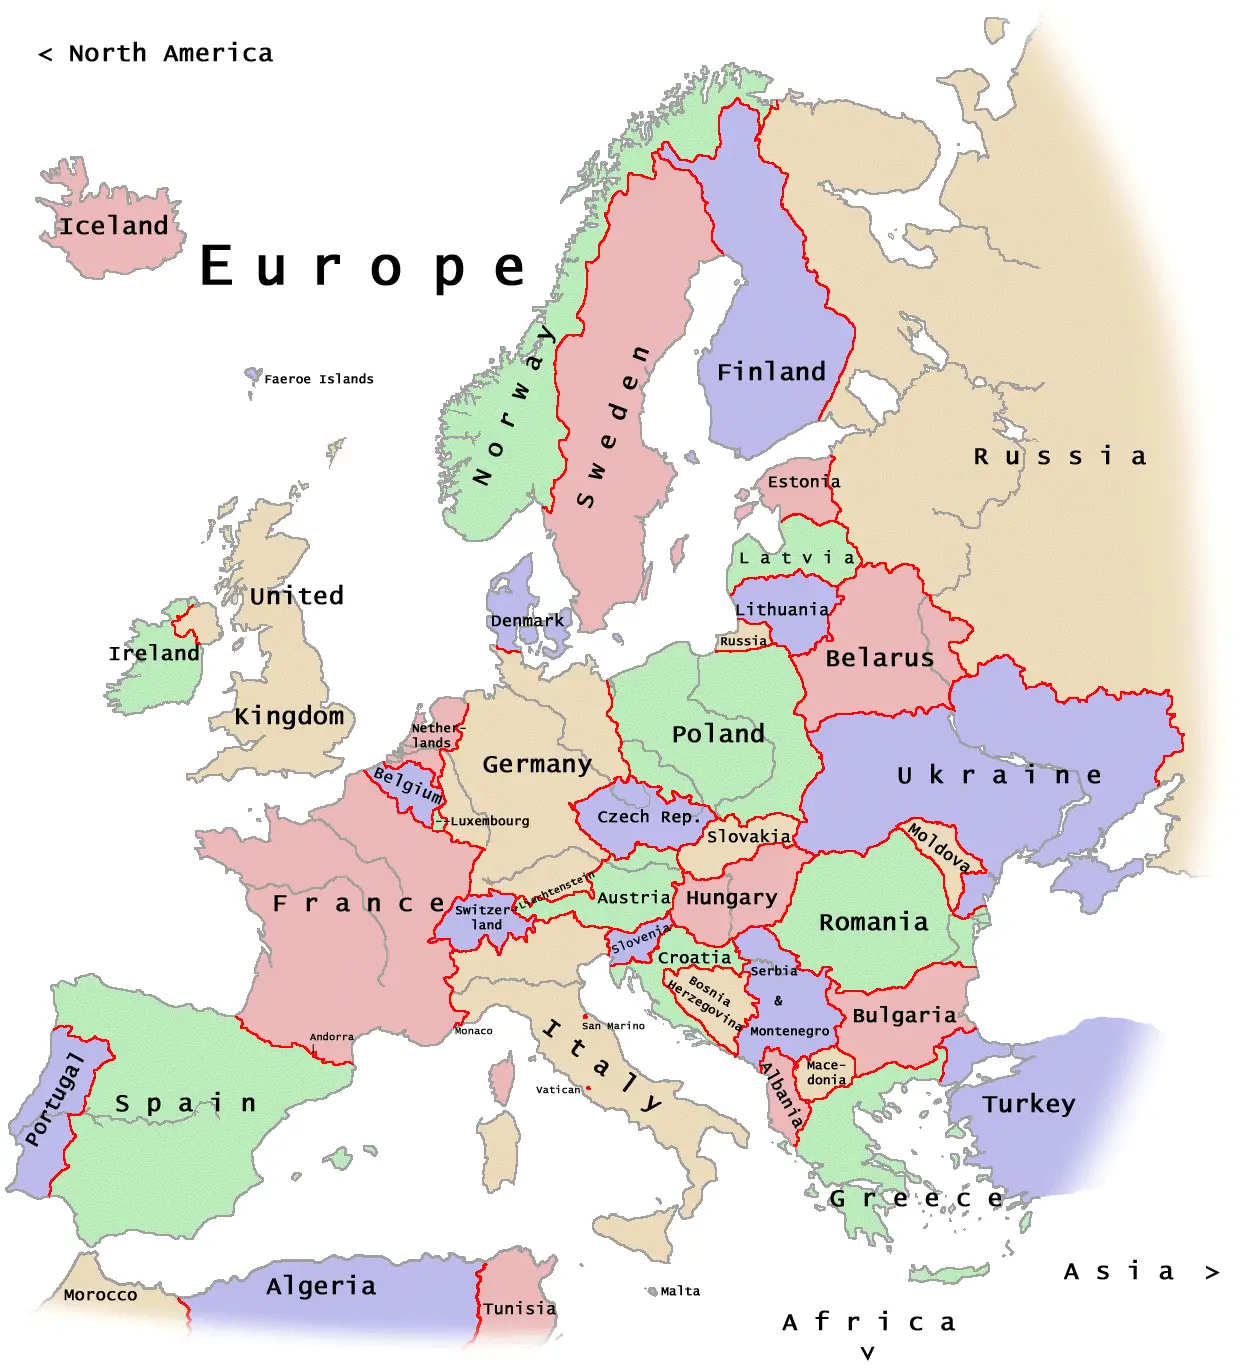 Europe Map Large